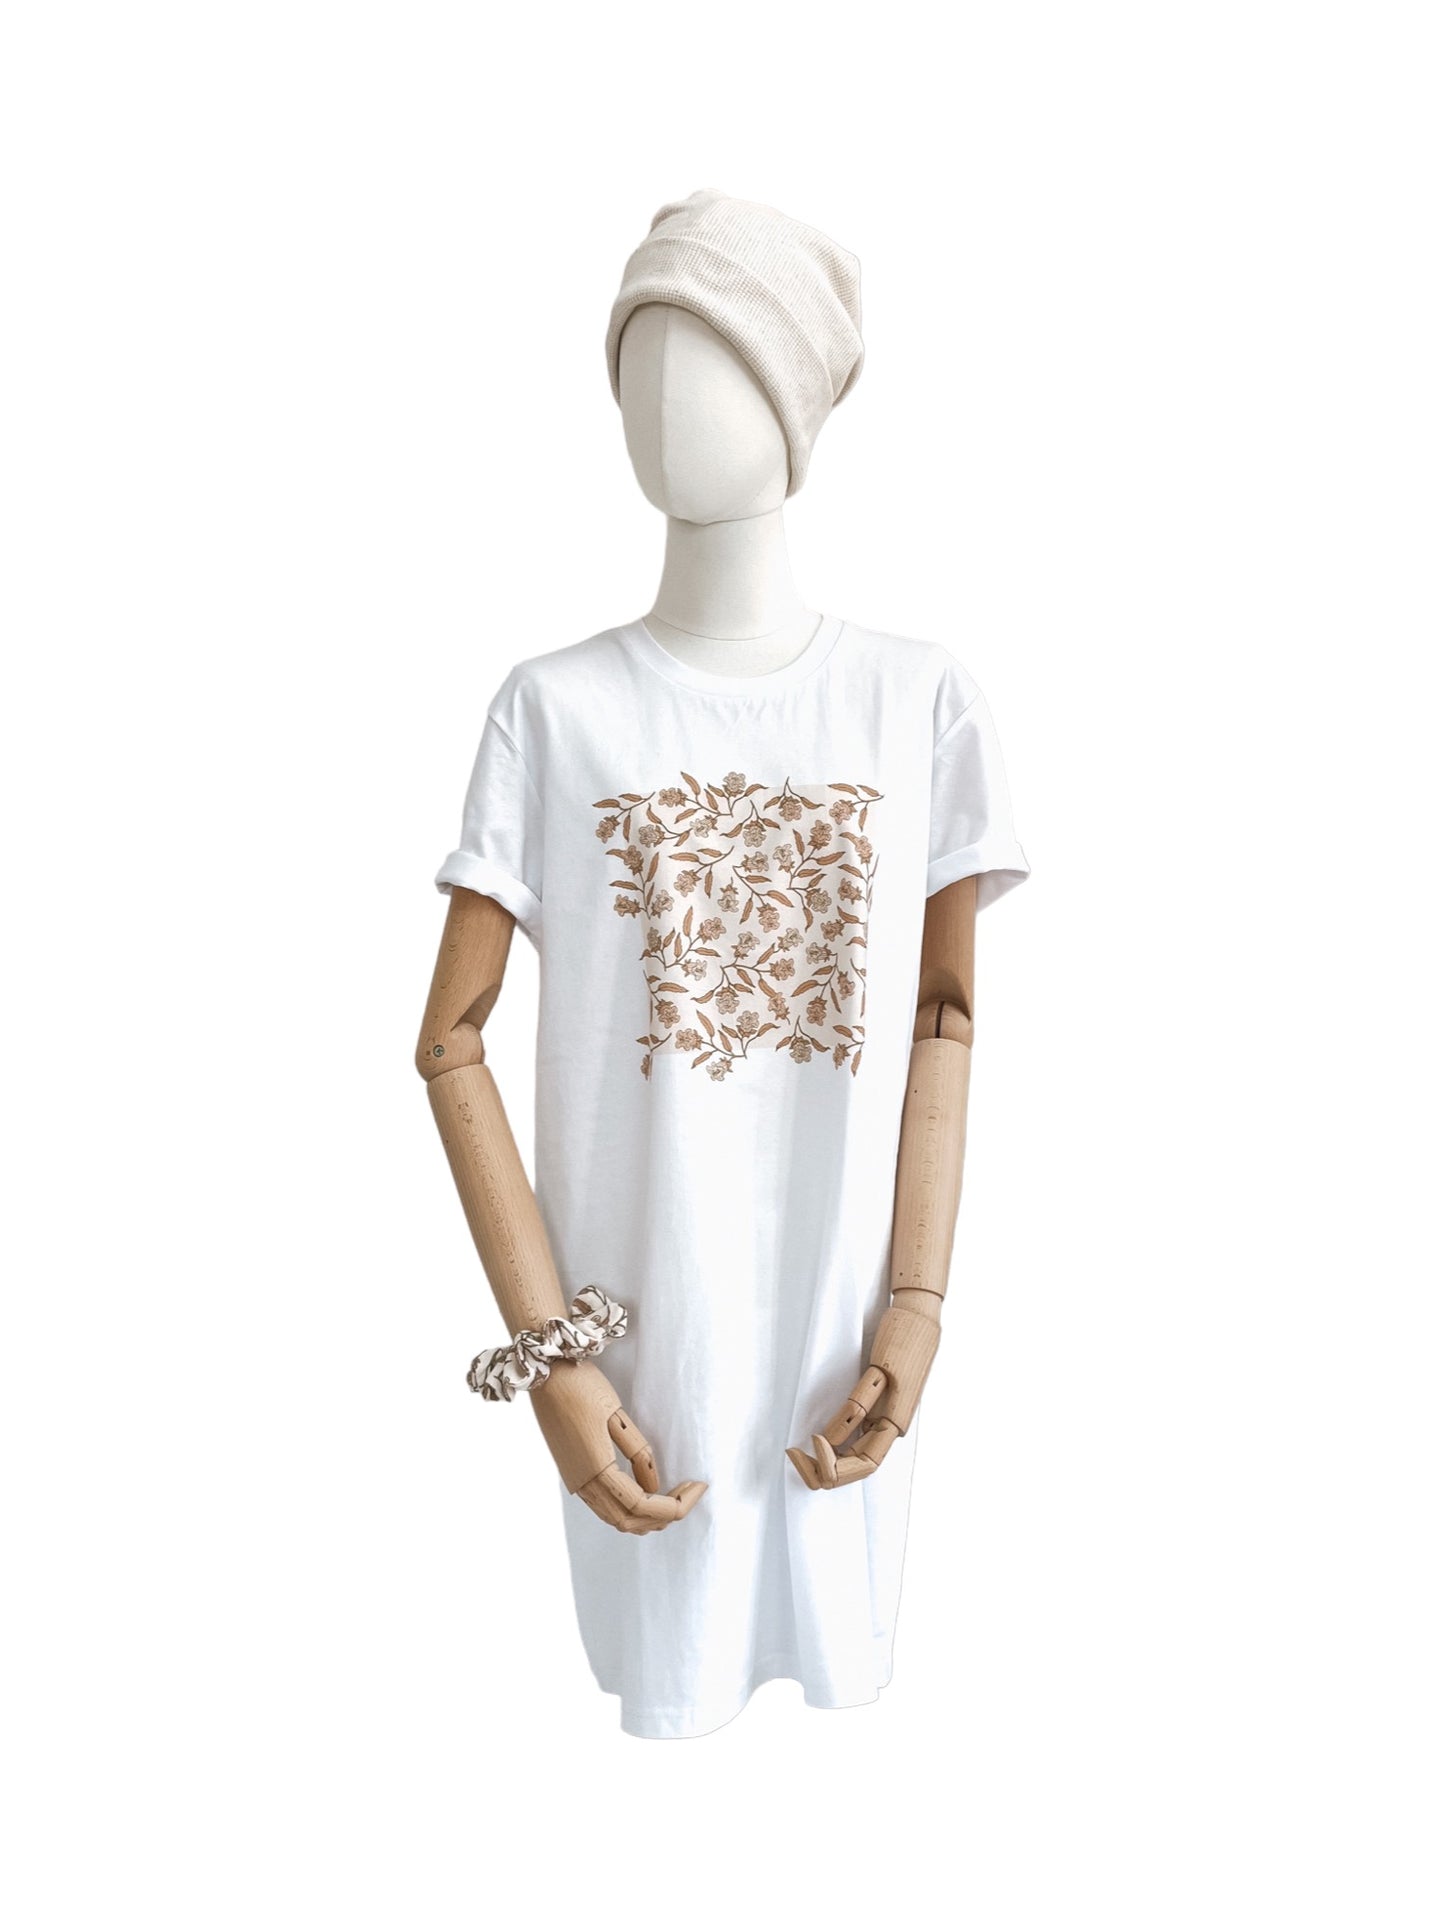 T-shirt dress / bell flowers / white